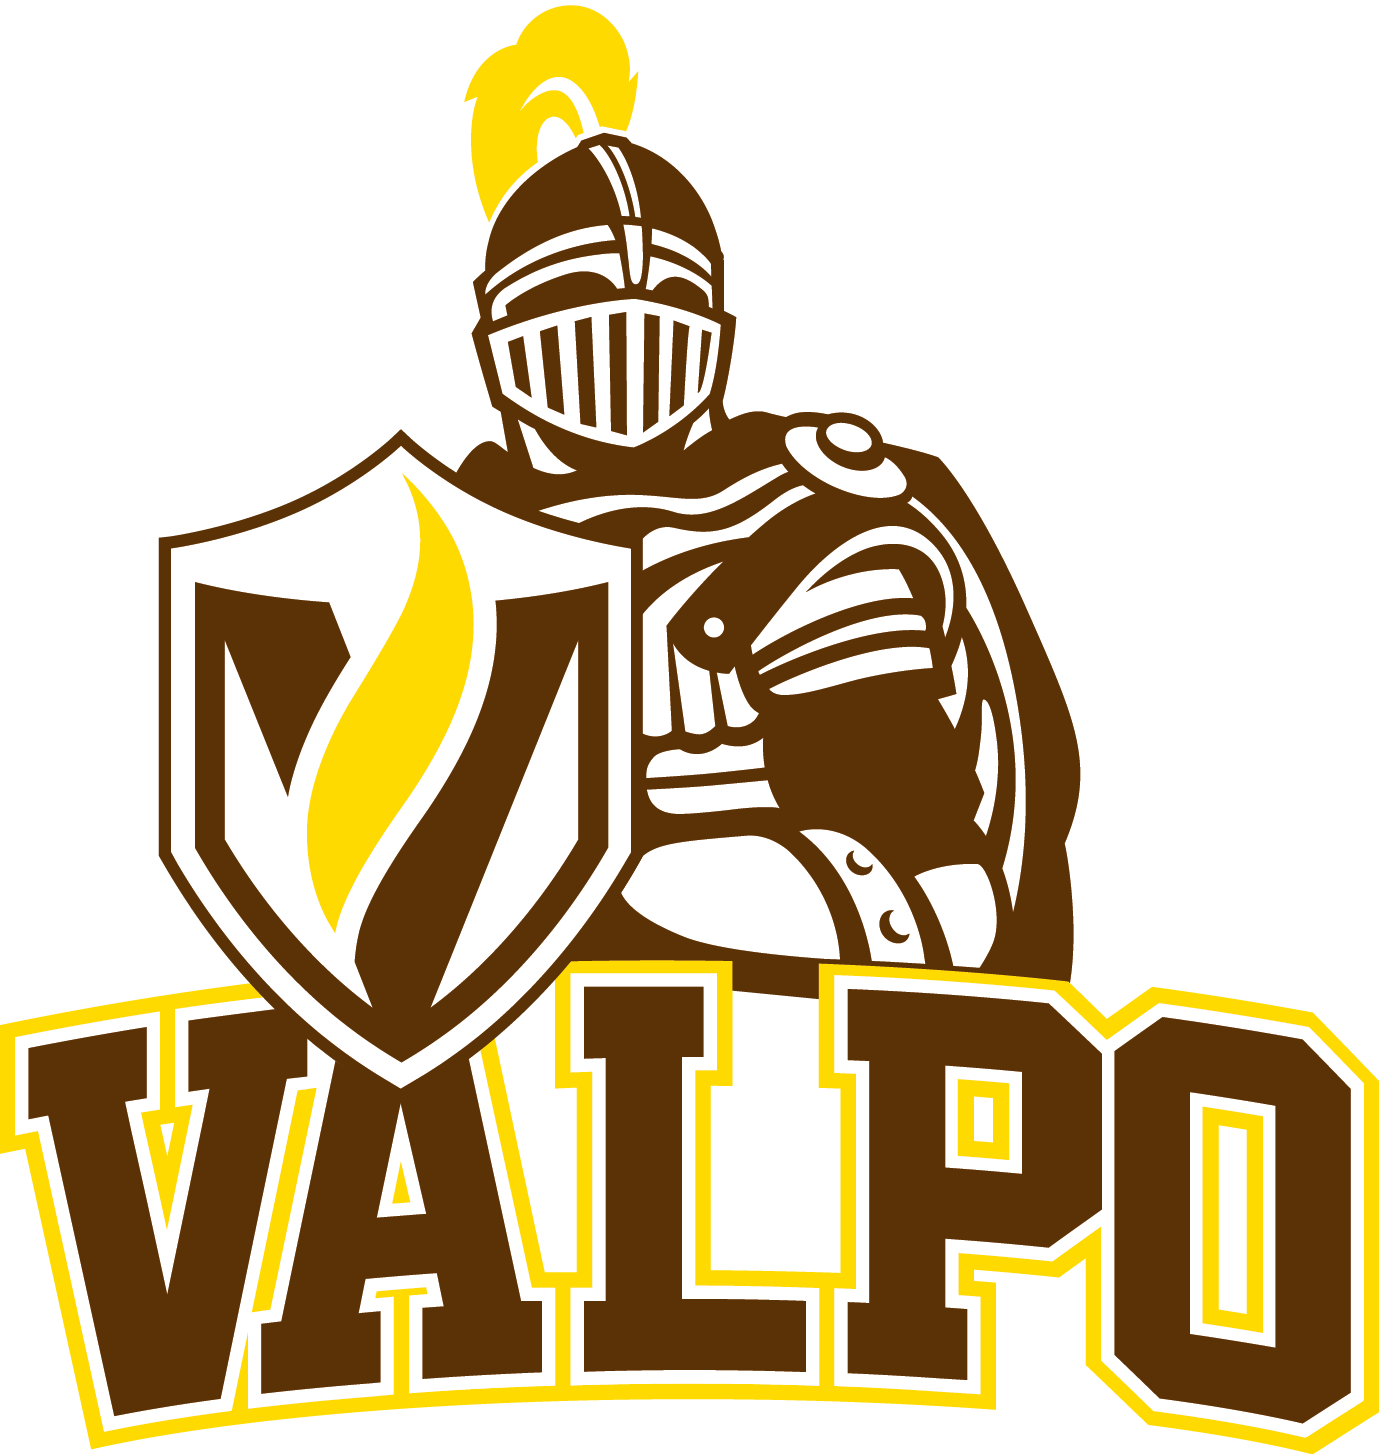 Valpo Logo - Download Logos | Valparaiso University Brand